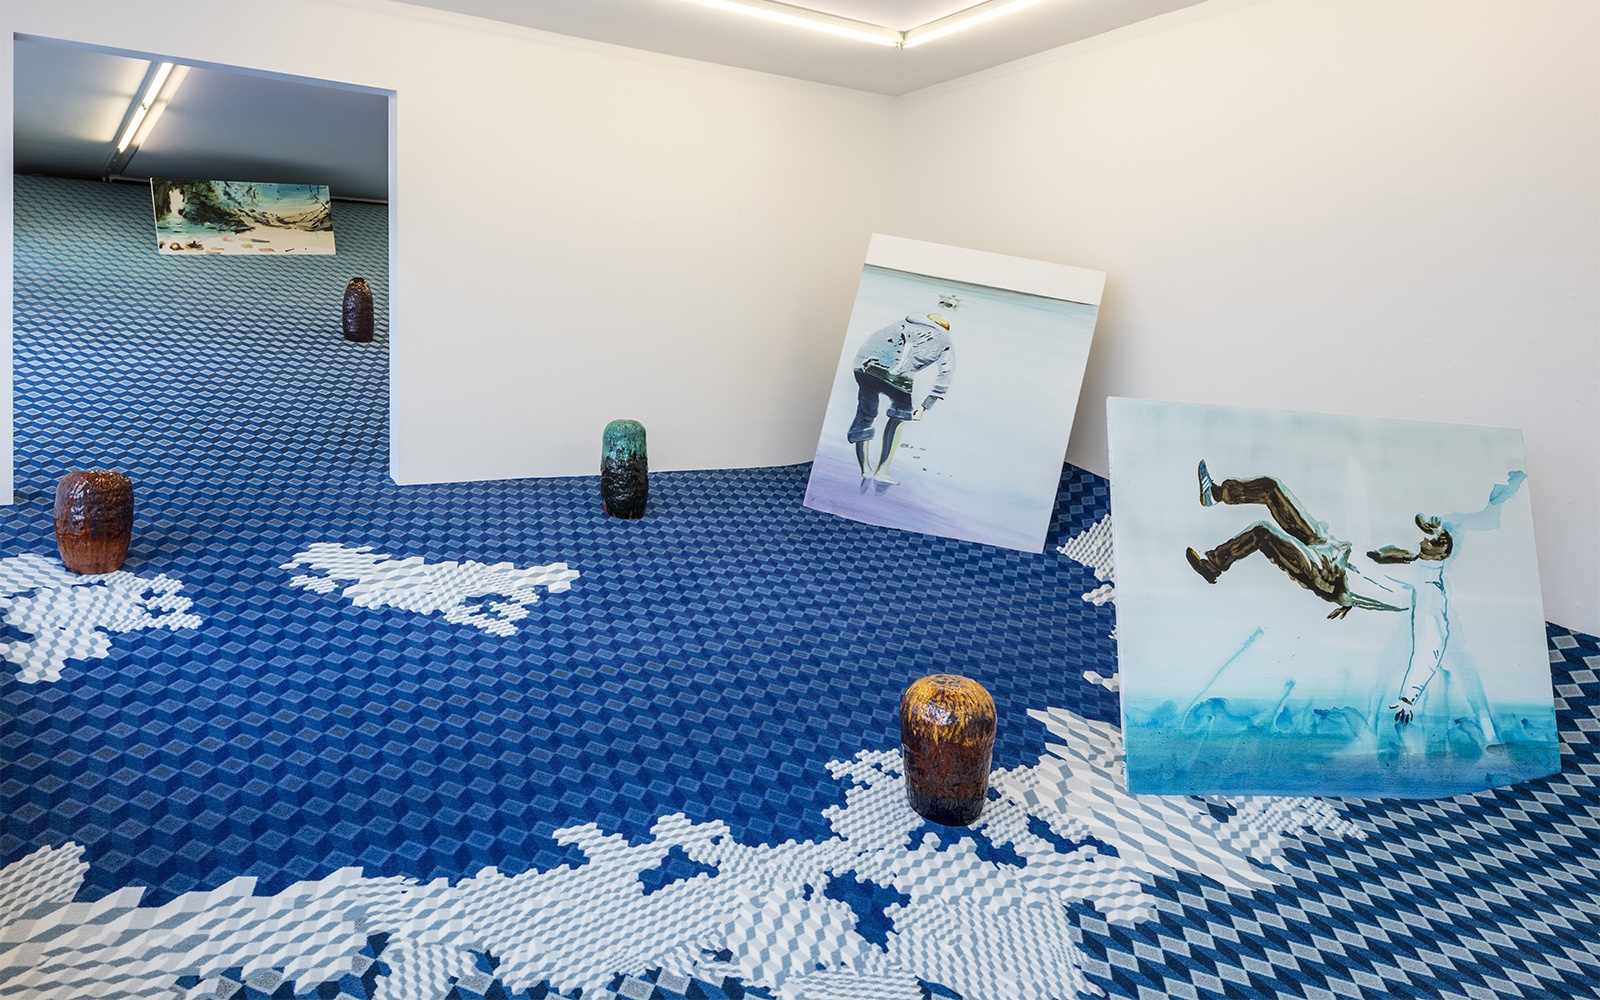 'Blue Bedroom' Project by Danish artist John Korner